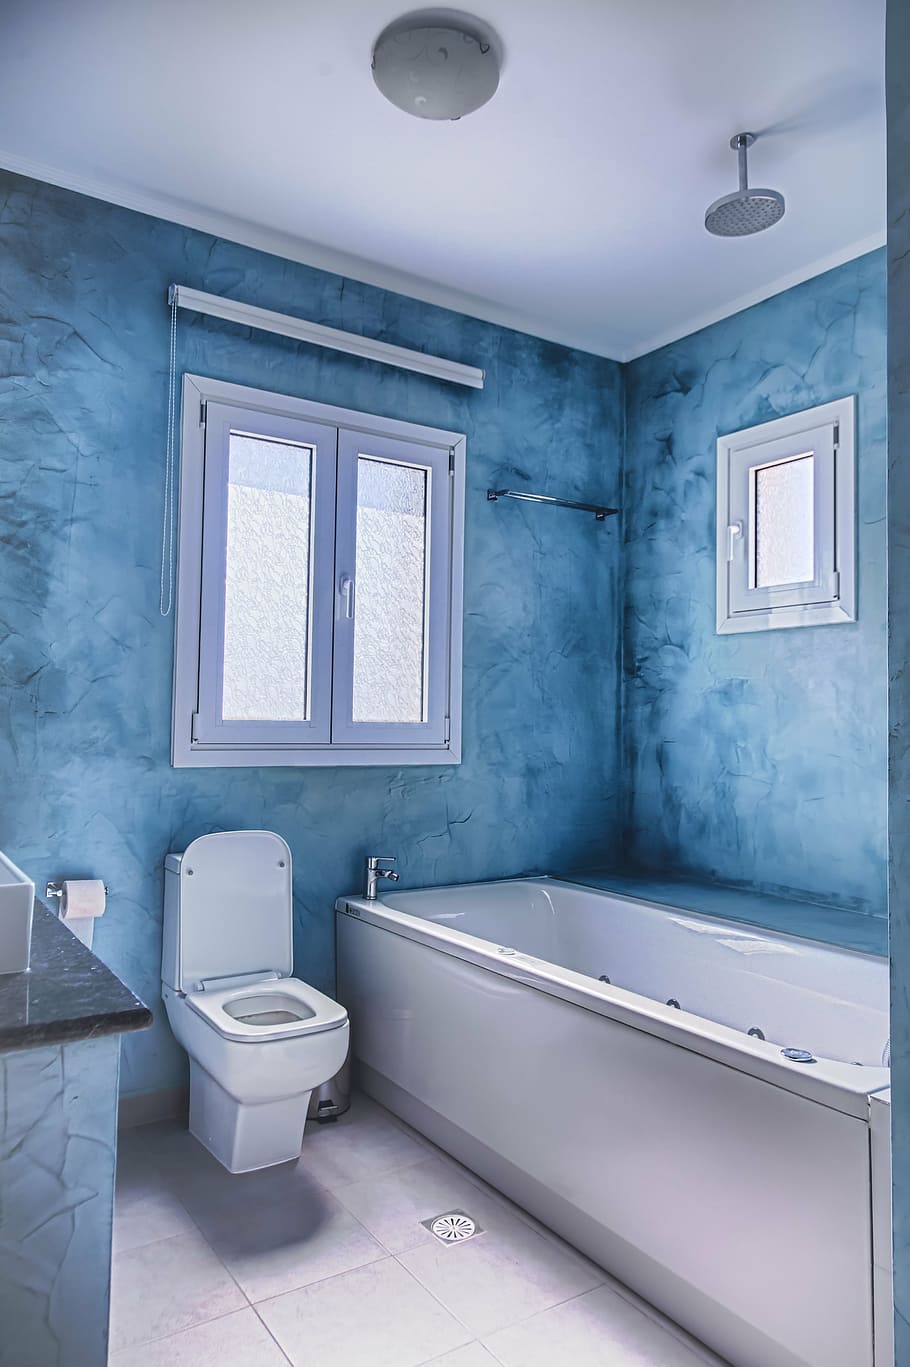 white ceramic sink, flash toilet and white window frame, species